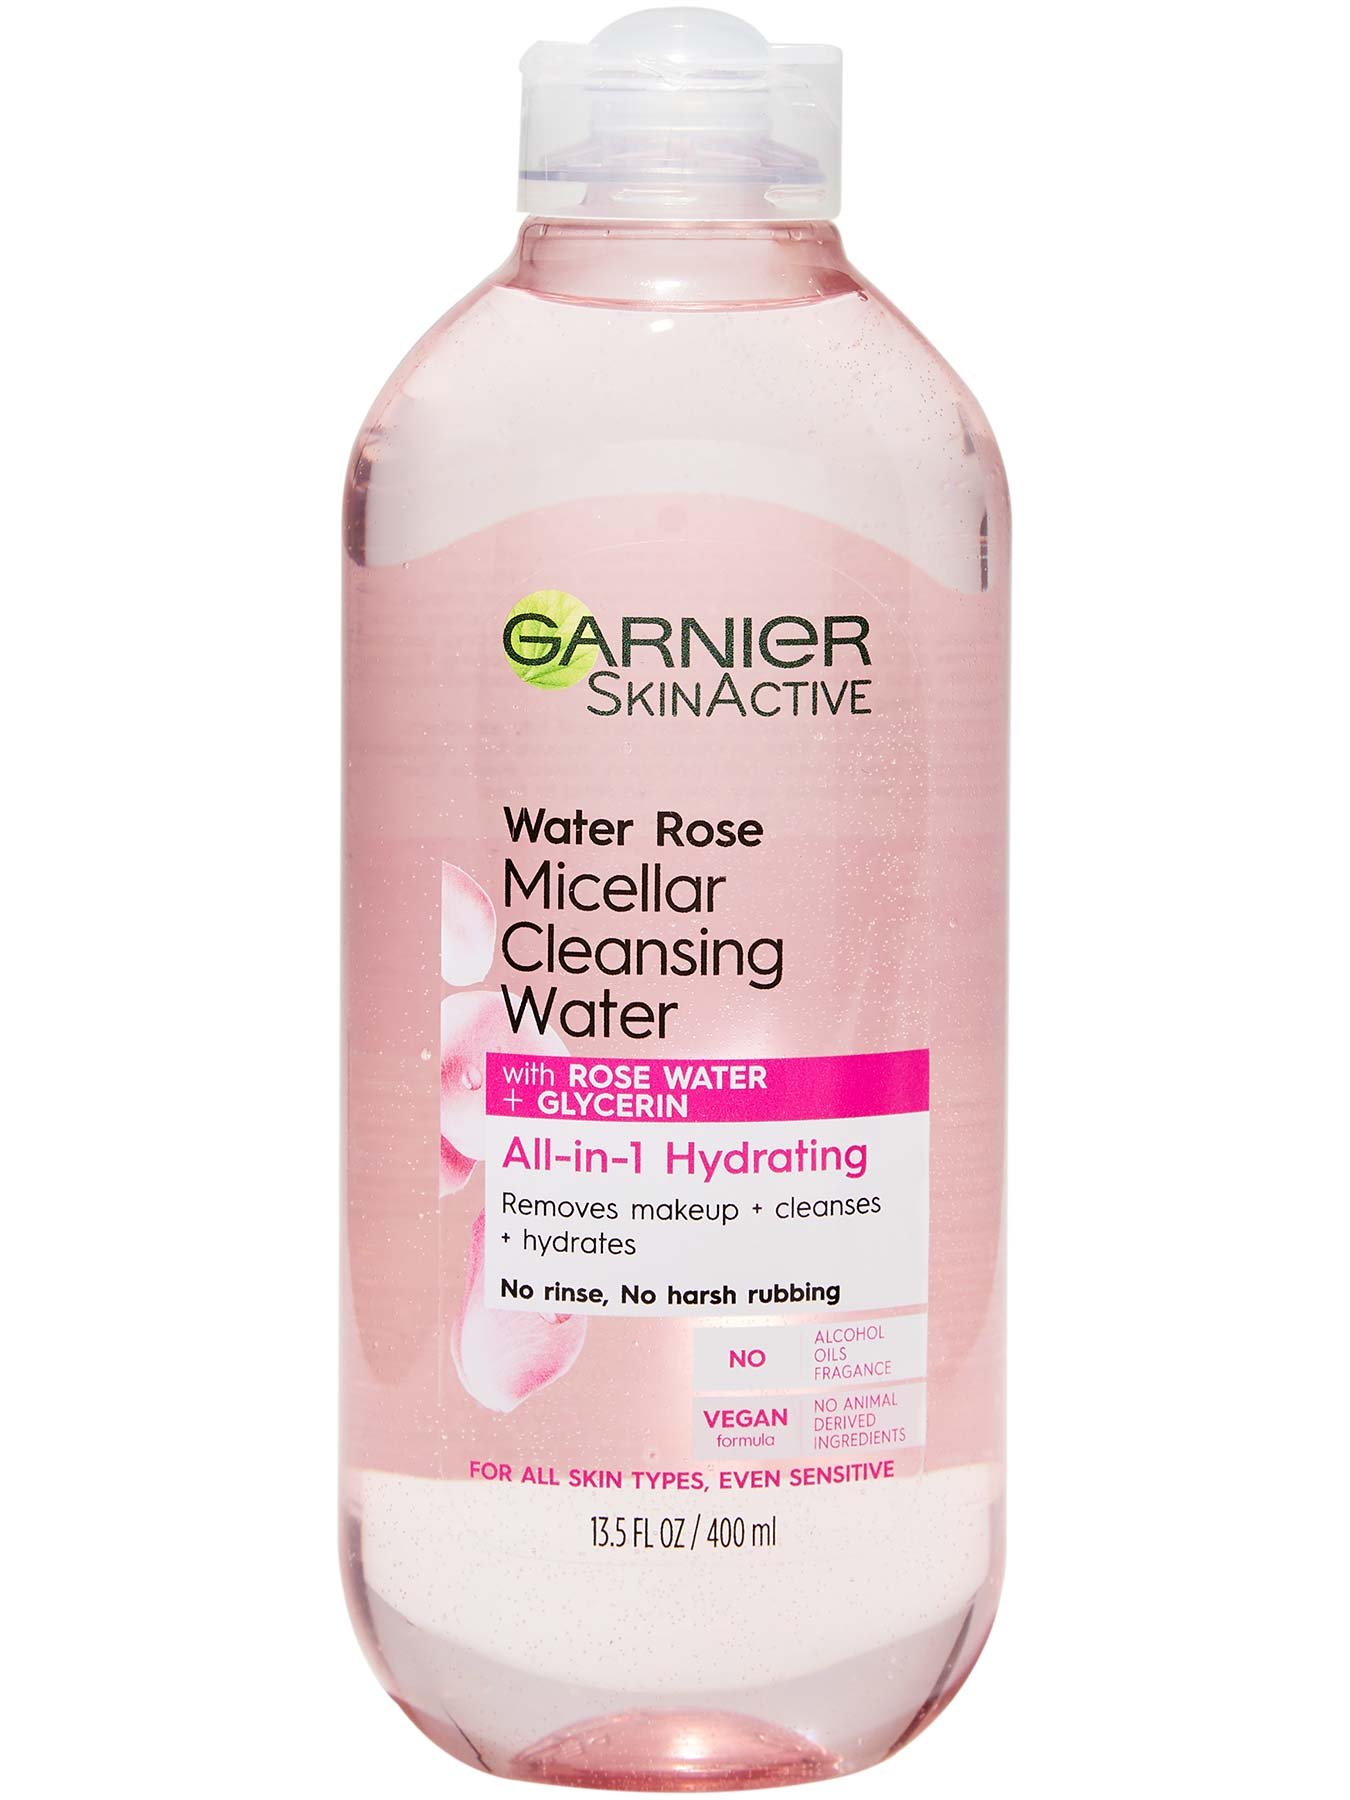 Water Rose Micellar Cleansing Water & Makeup Remover- Garnier SkinActive